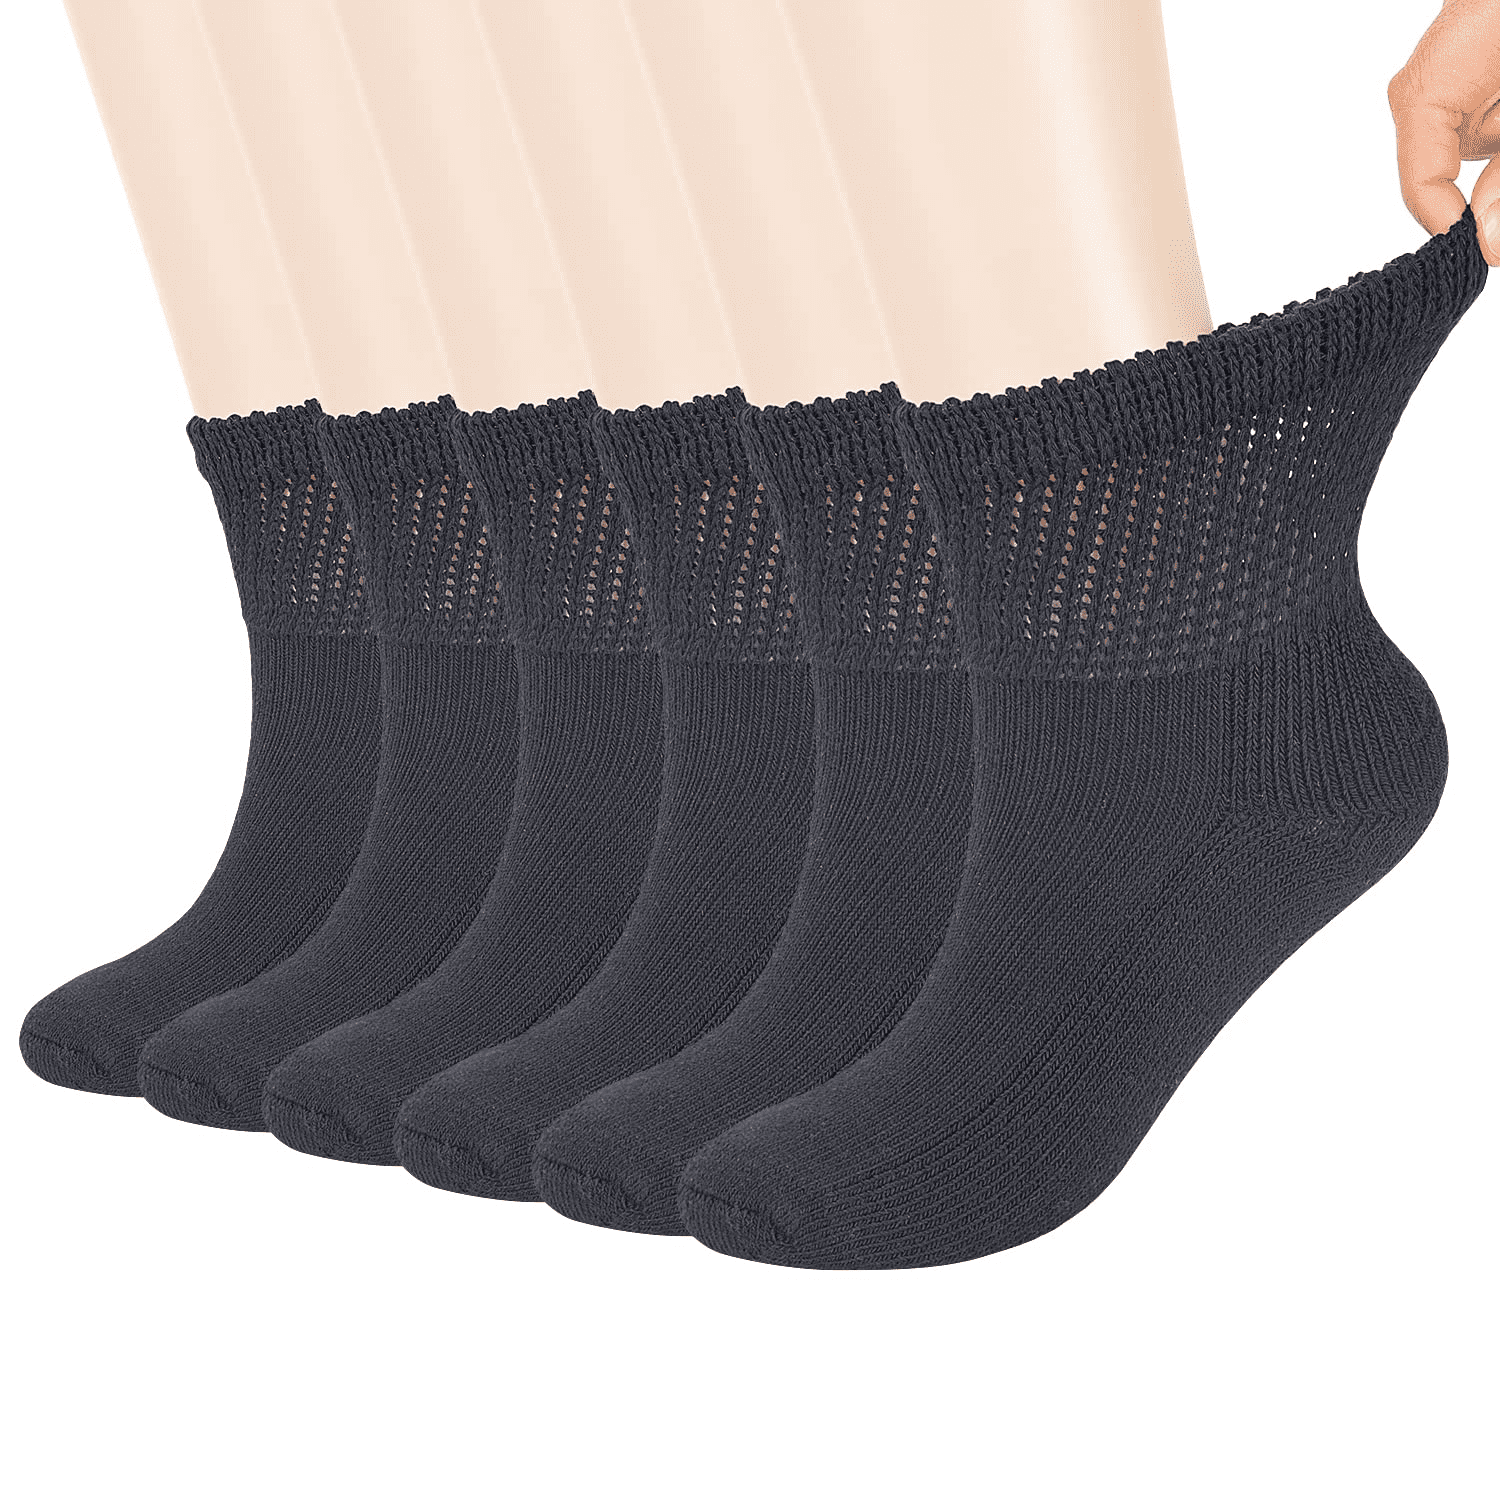 MD FootThera Diabetic Quarter Socks for Men Non Binding Top - Walmart.com